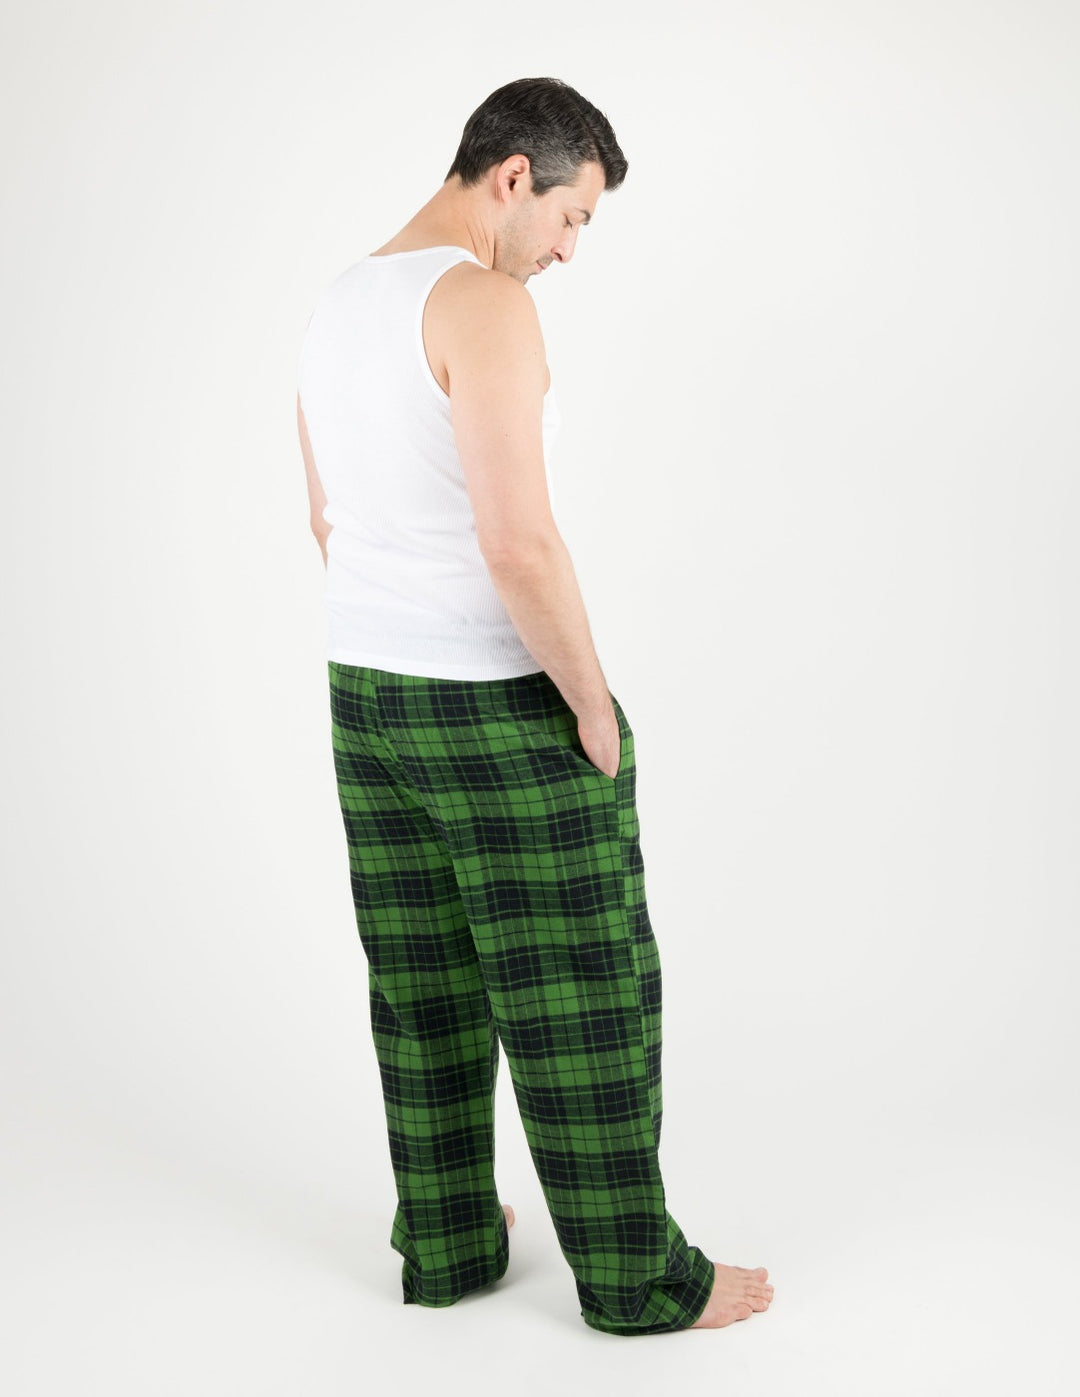 Leveret Women's 2 Piece Pajamas Set Cotton Top Flannel Pants Black Plaid  X-Small at  Women's Clothing store